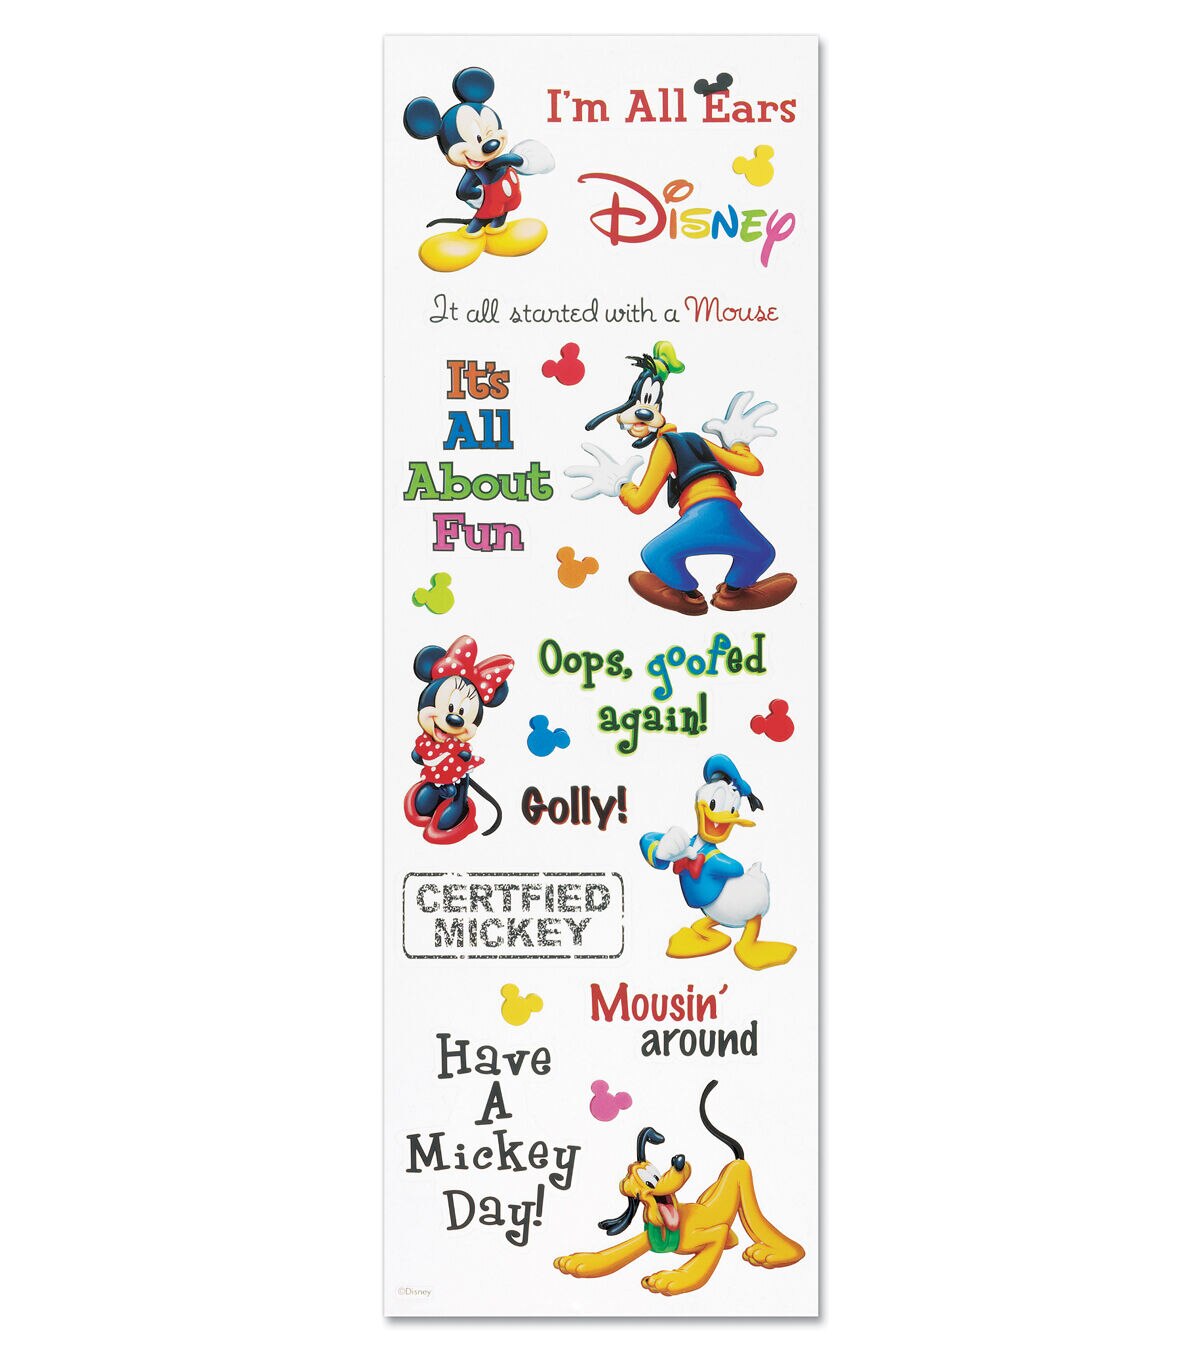 Disney Princesses 20 x 15.5 cm ***Choose*** Disney Character Stickers Mickey 